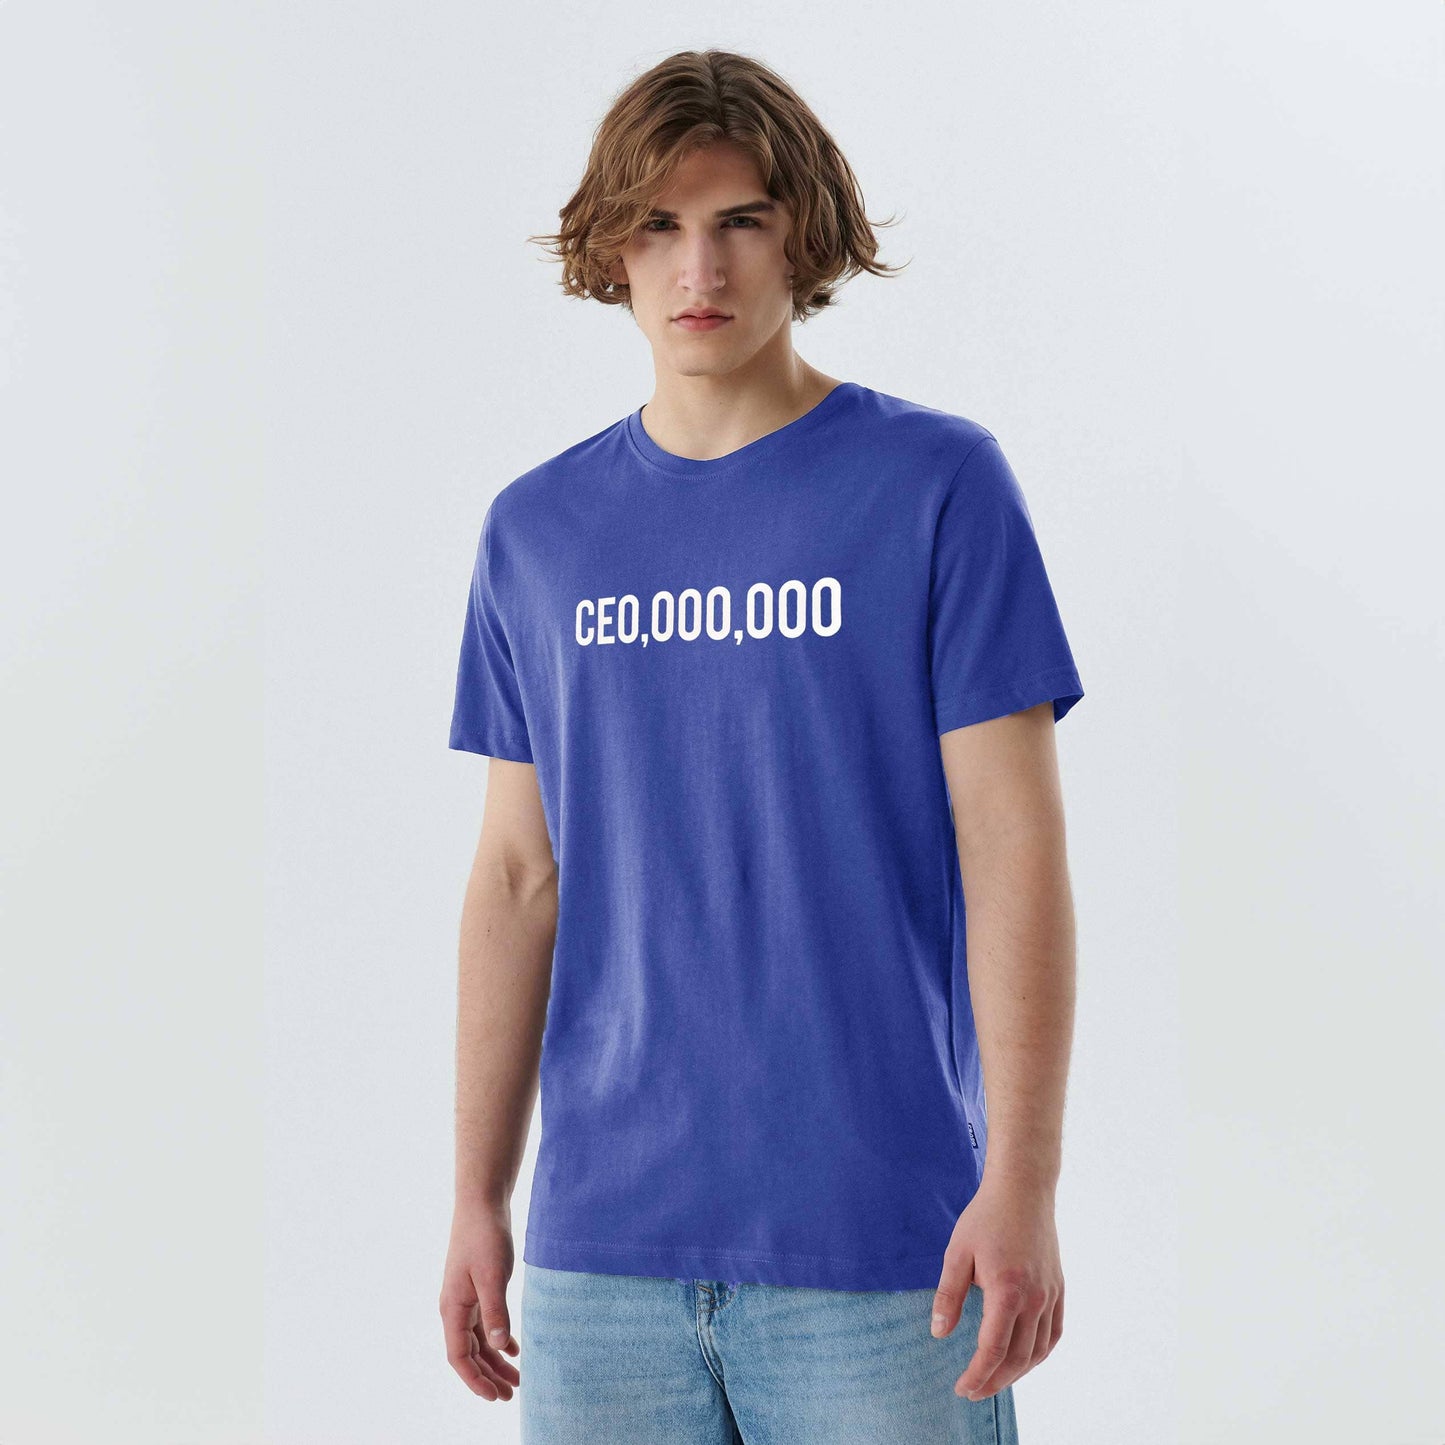 Men's Printed Crew Neck Tee Shirt CEO Millionaire Men's Tee Shirt Image Royal Blue XS 